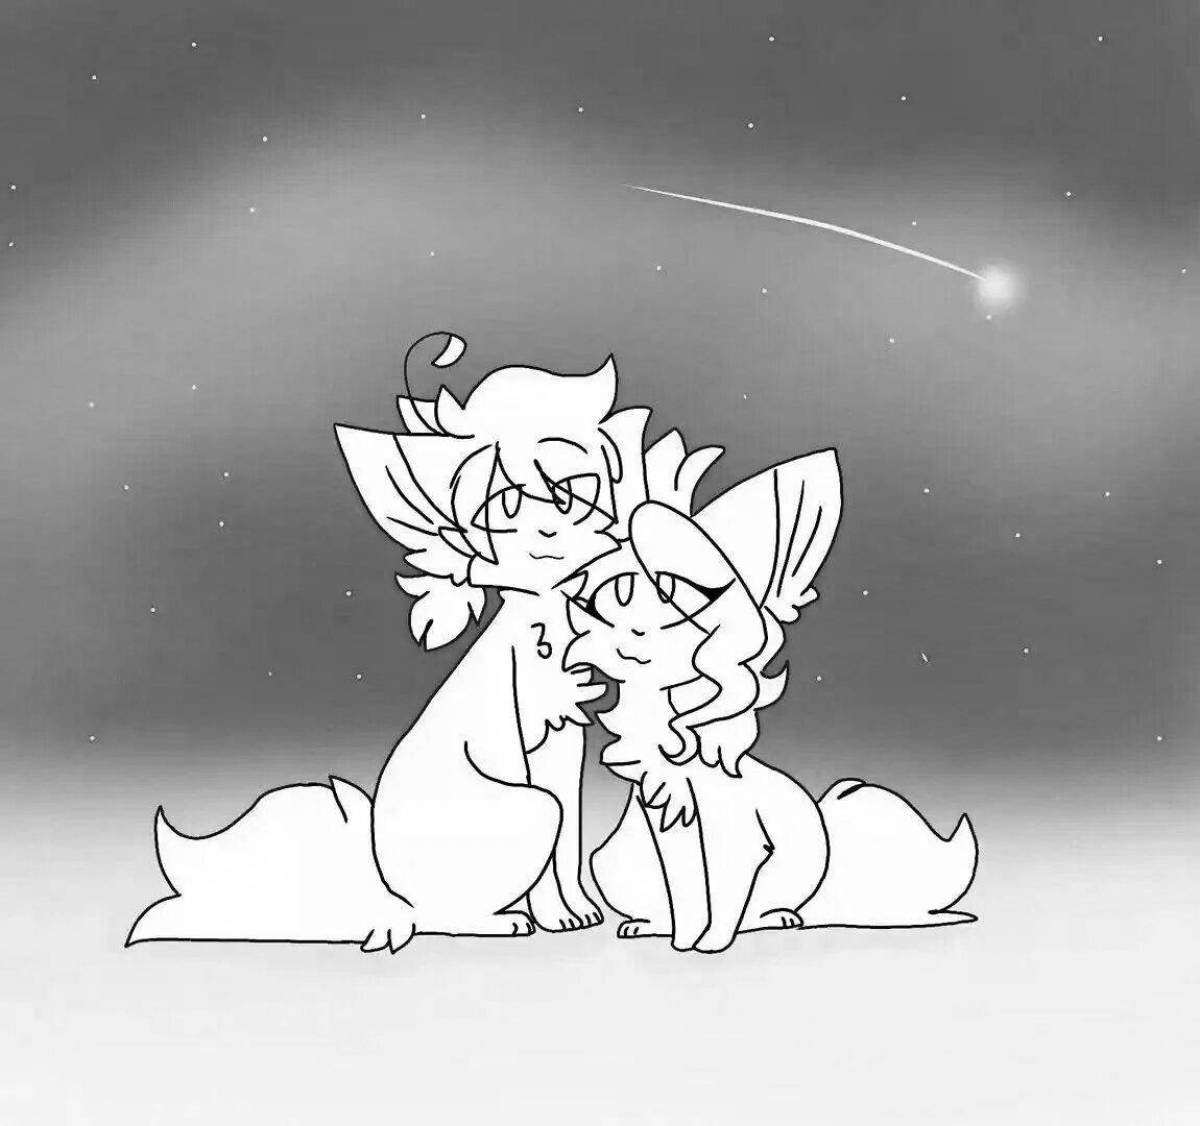 Energetic Yoshi and Cat Lana